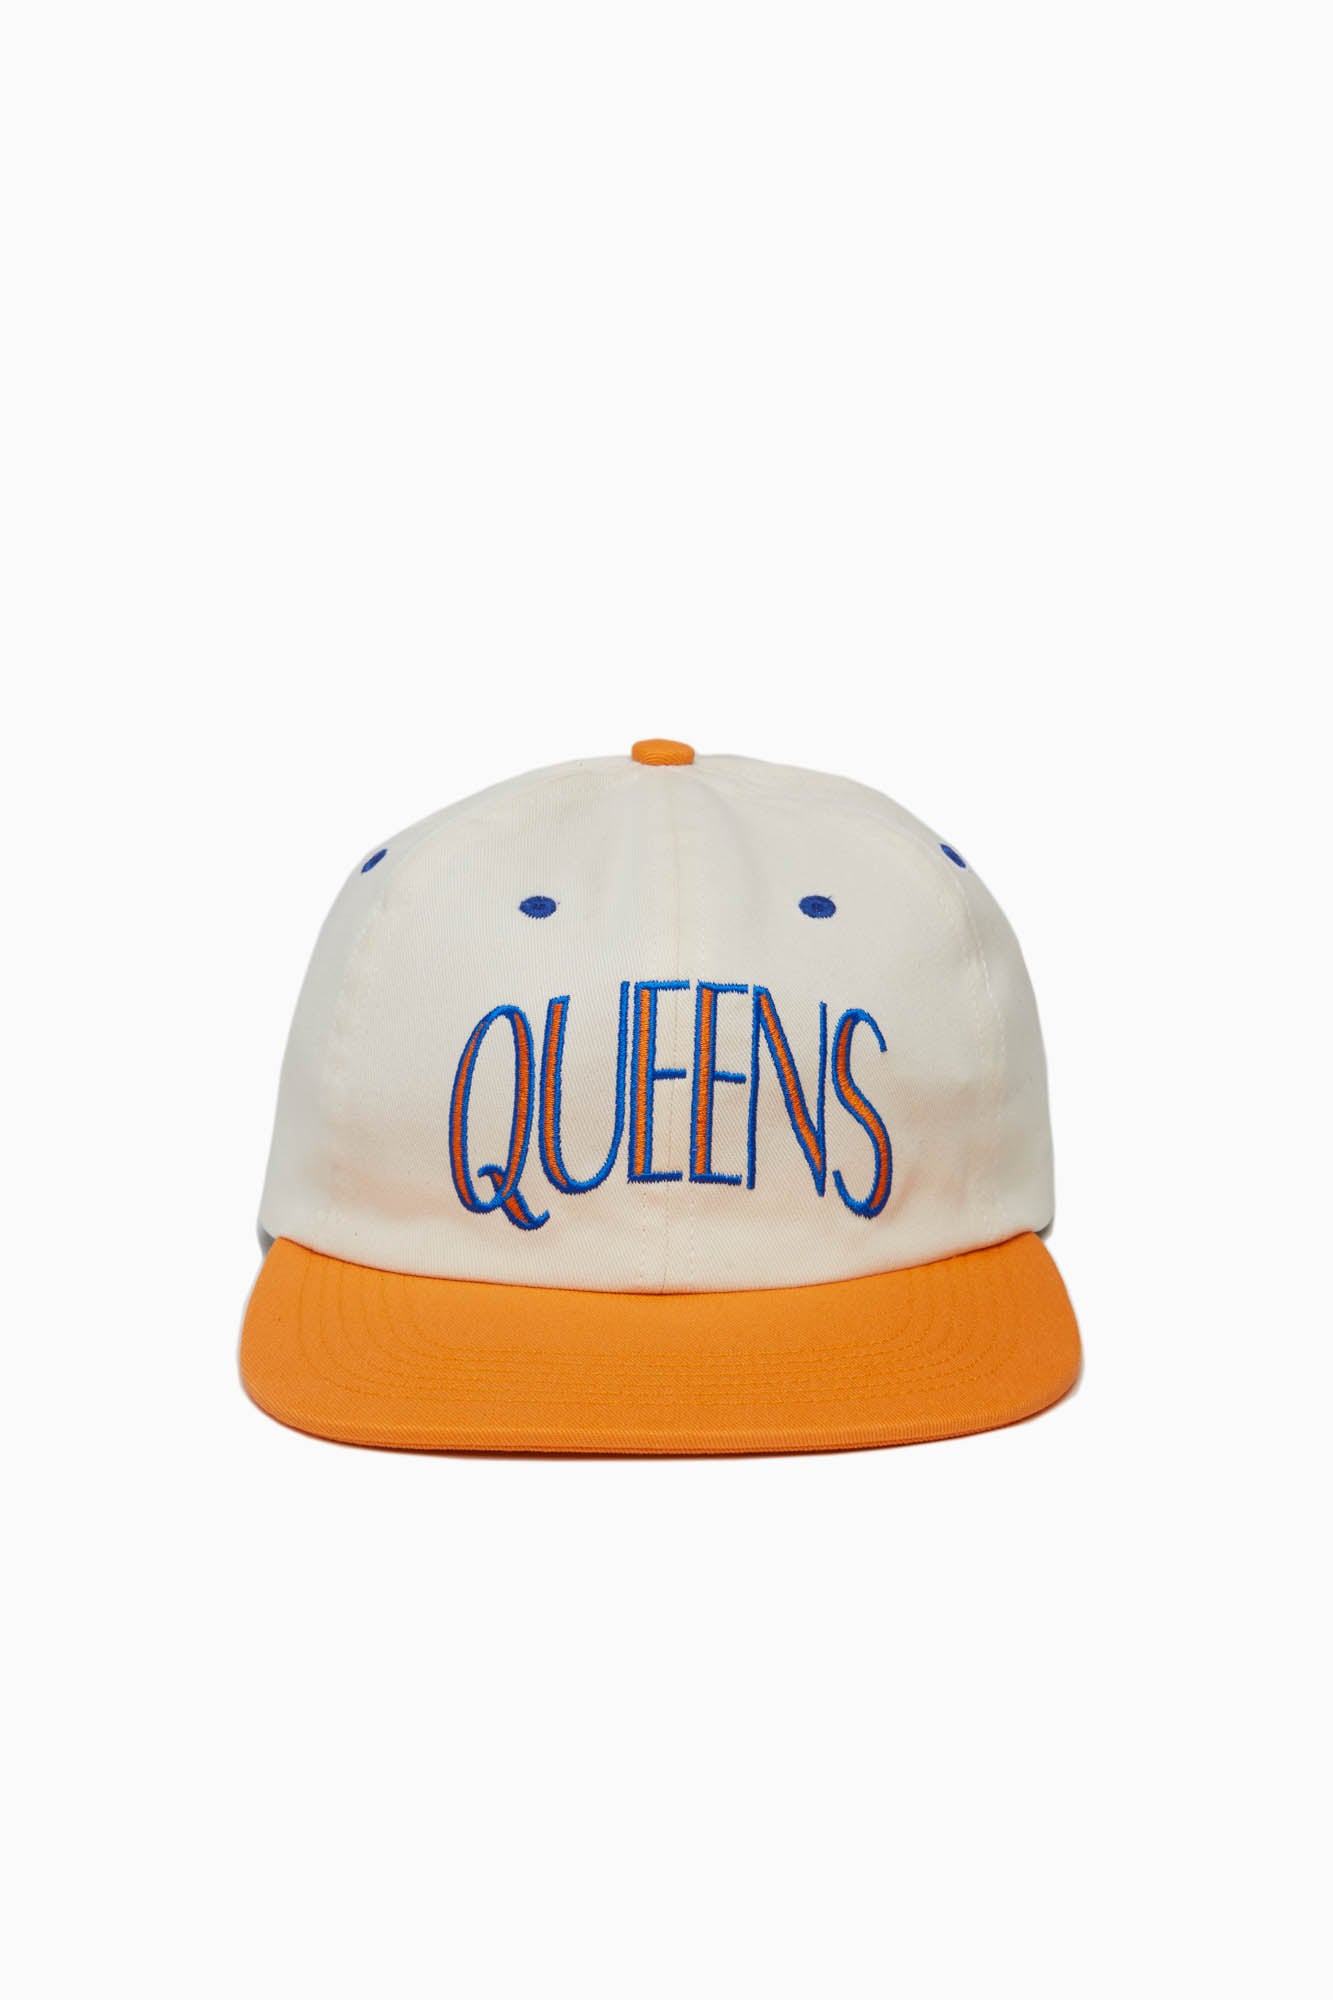 selects Queens Hat Blue Orange min-nano - 通販 - csa.sakura.ne.jp